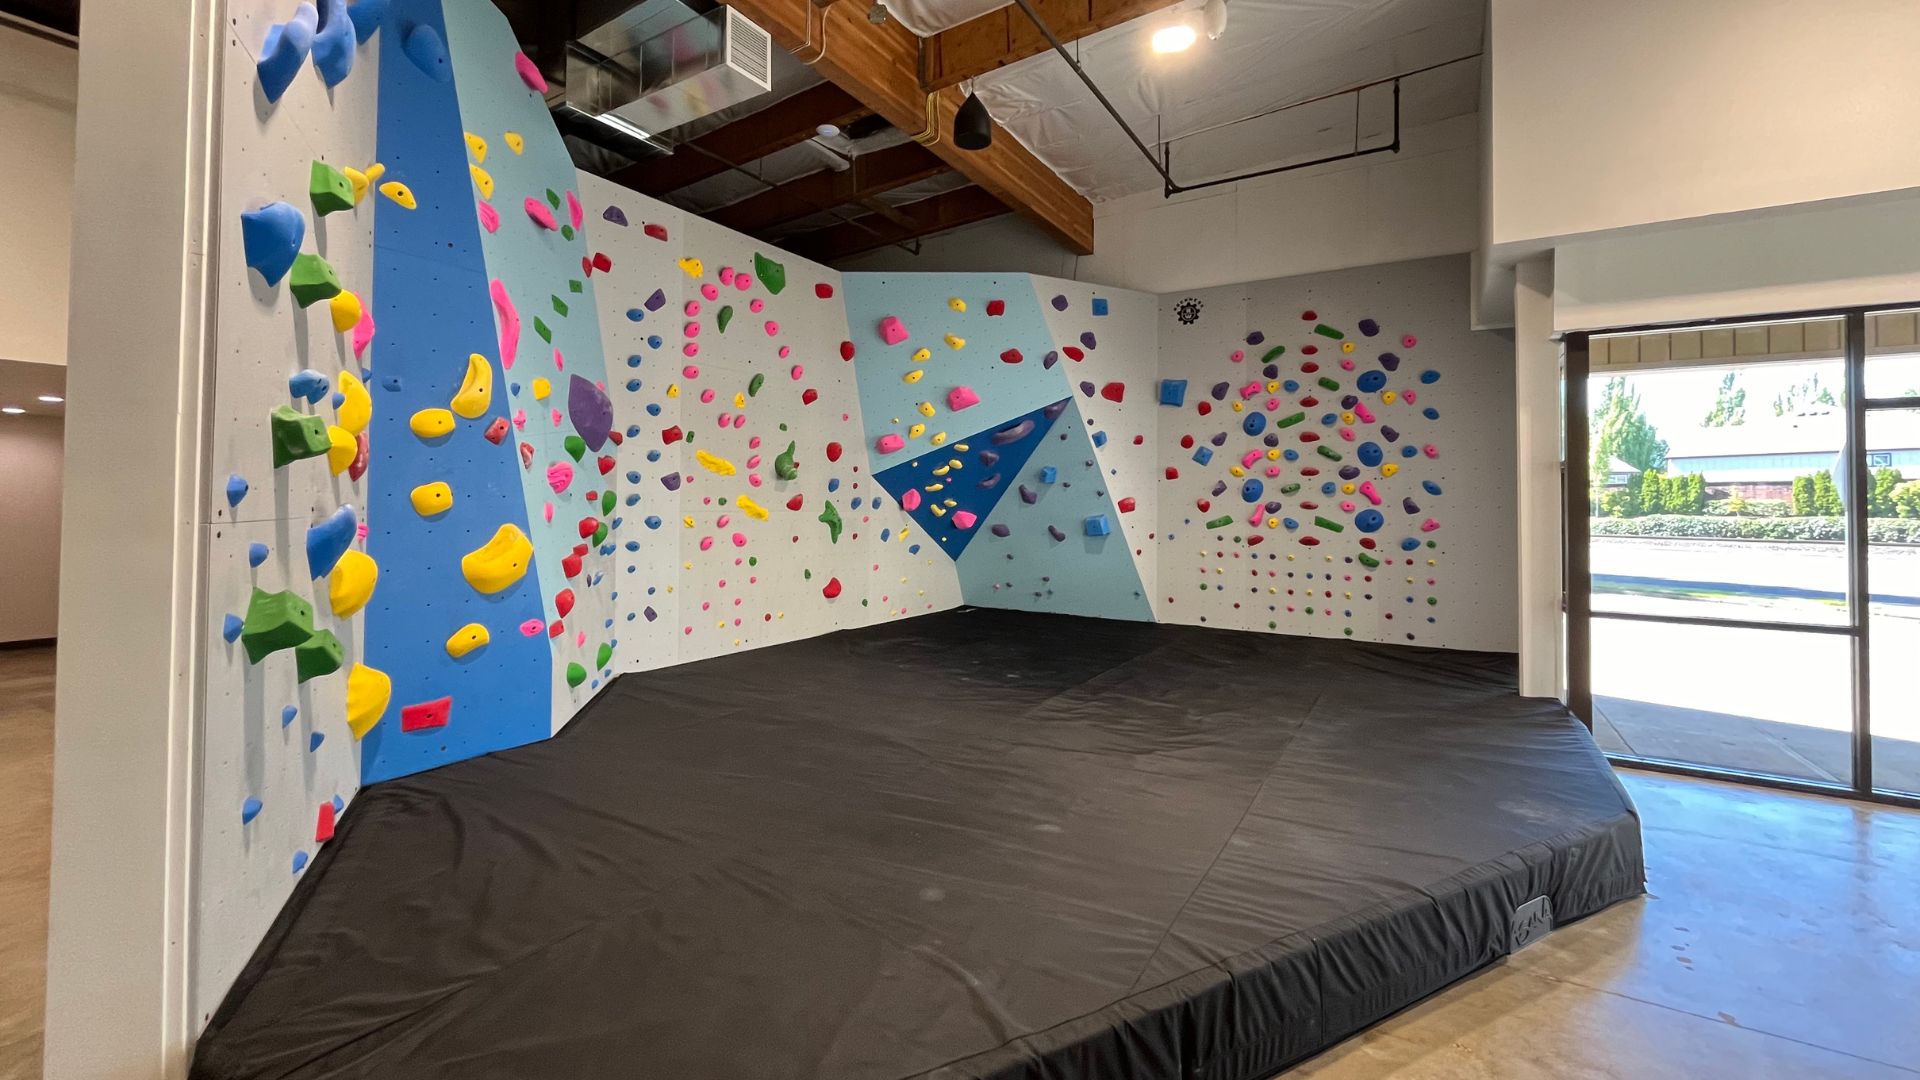 Bouldering walls at Beyond the Wall Climbing gym